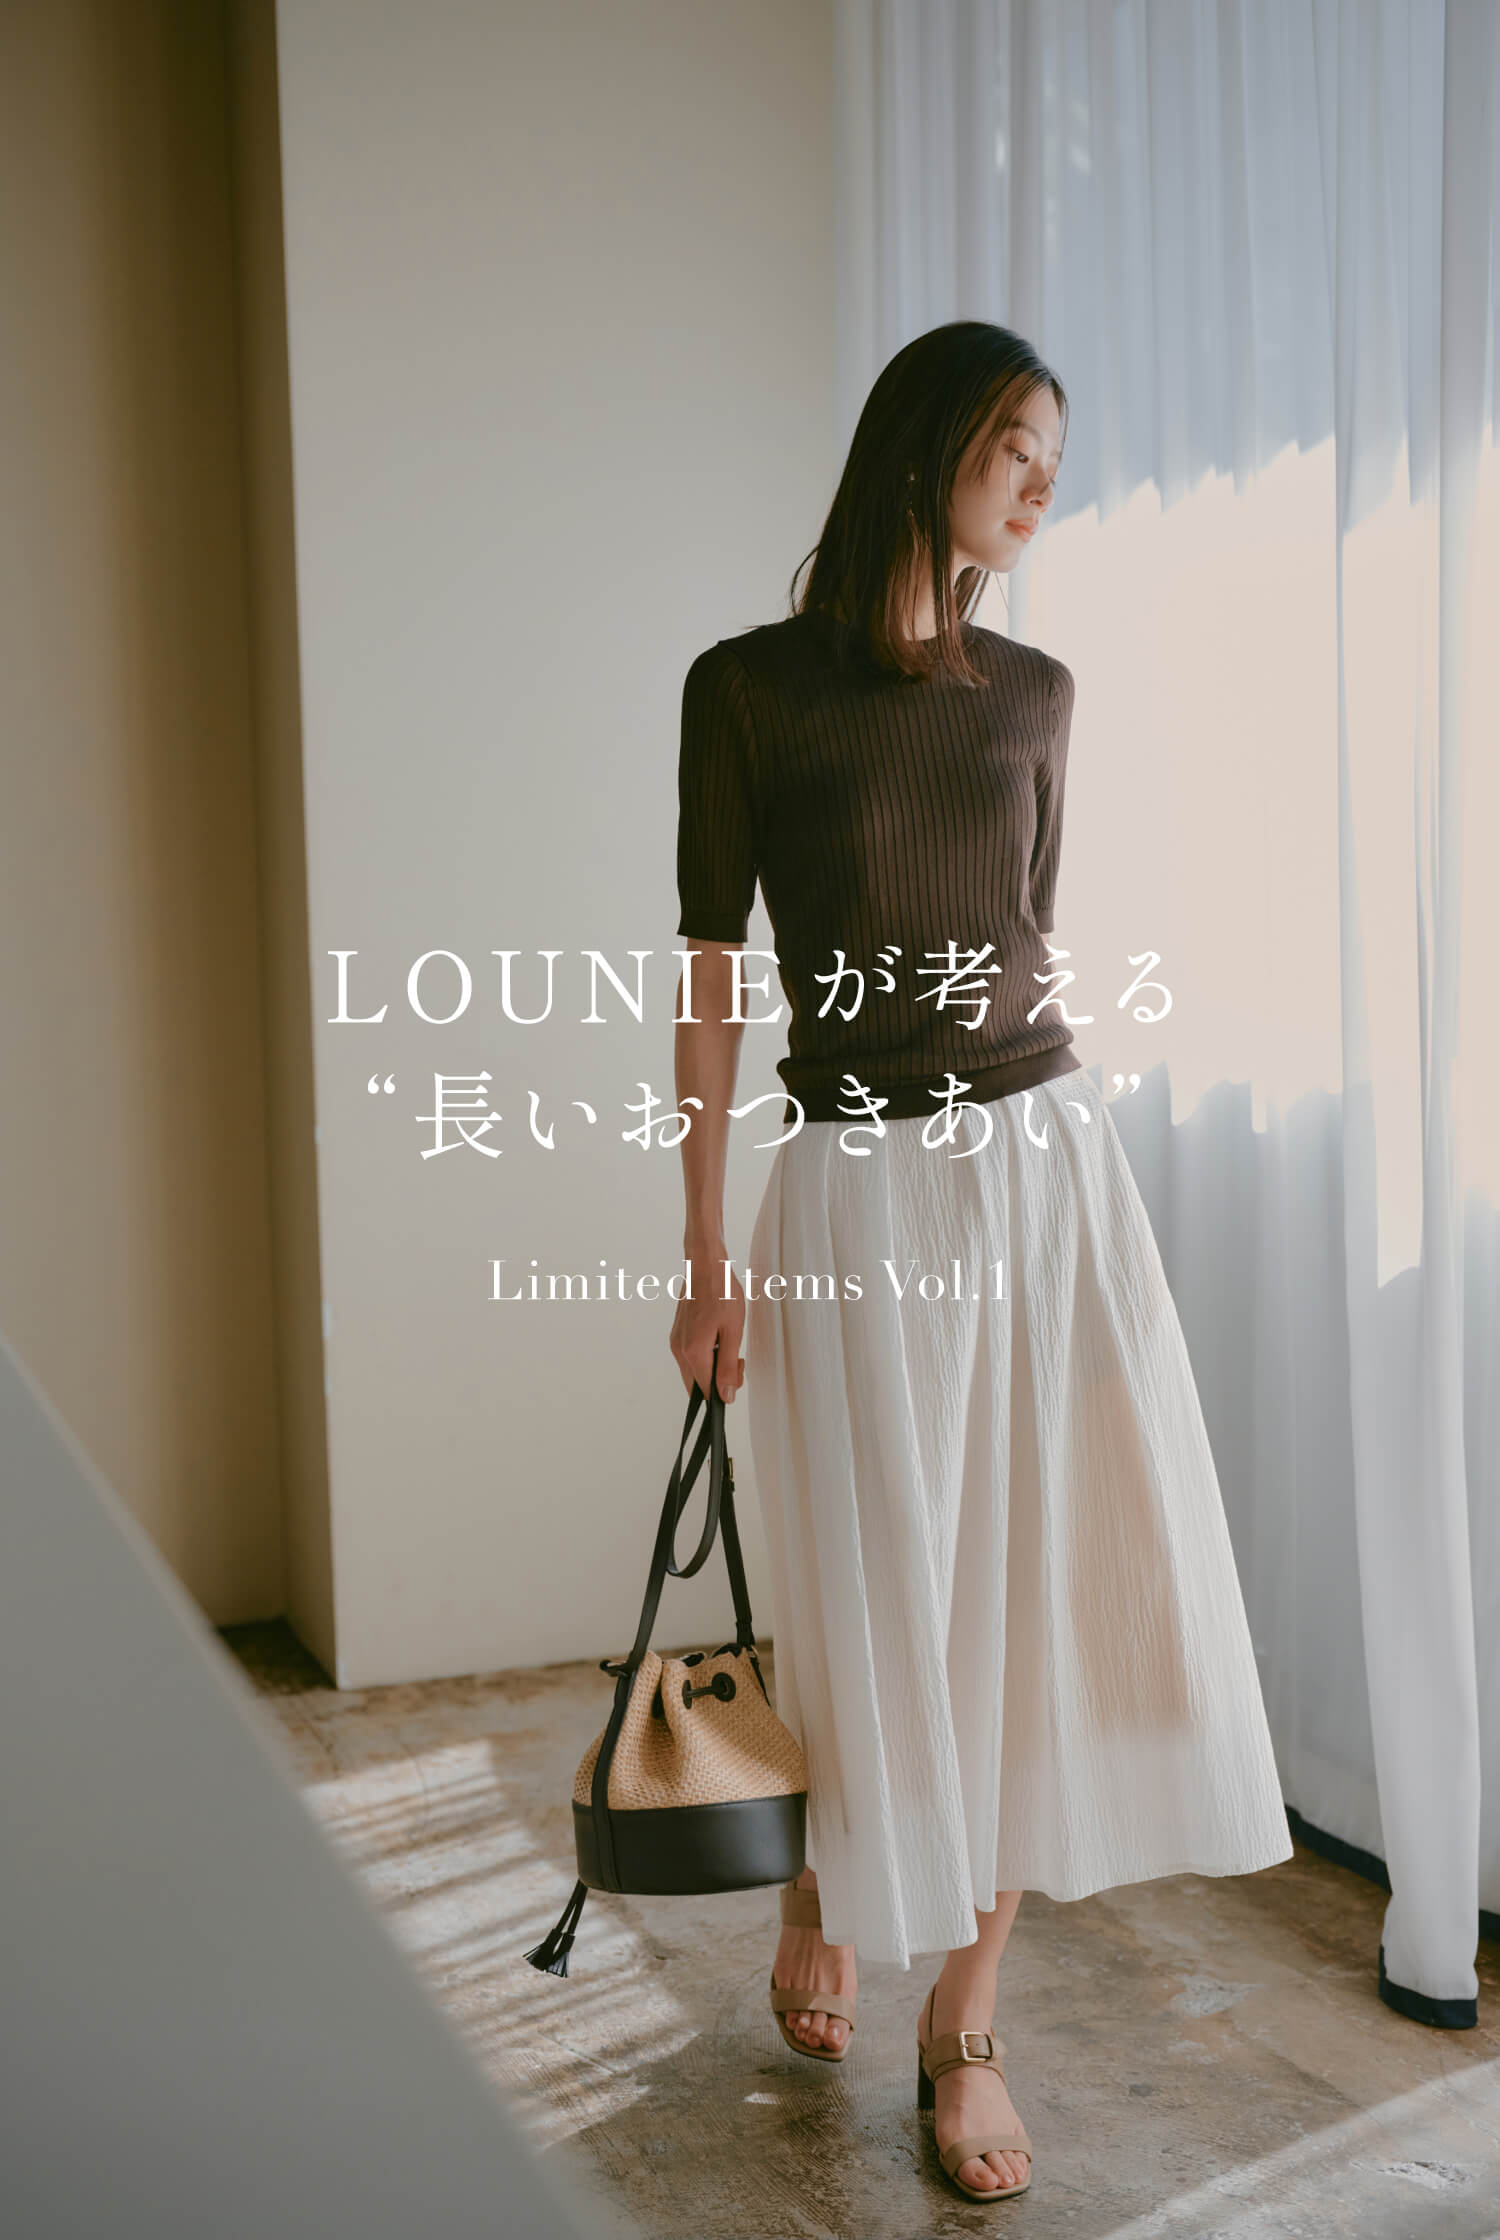 LOUNIEが考える“長いおつきあい”  Limited Items Vol.1